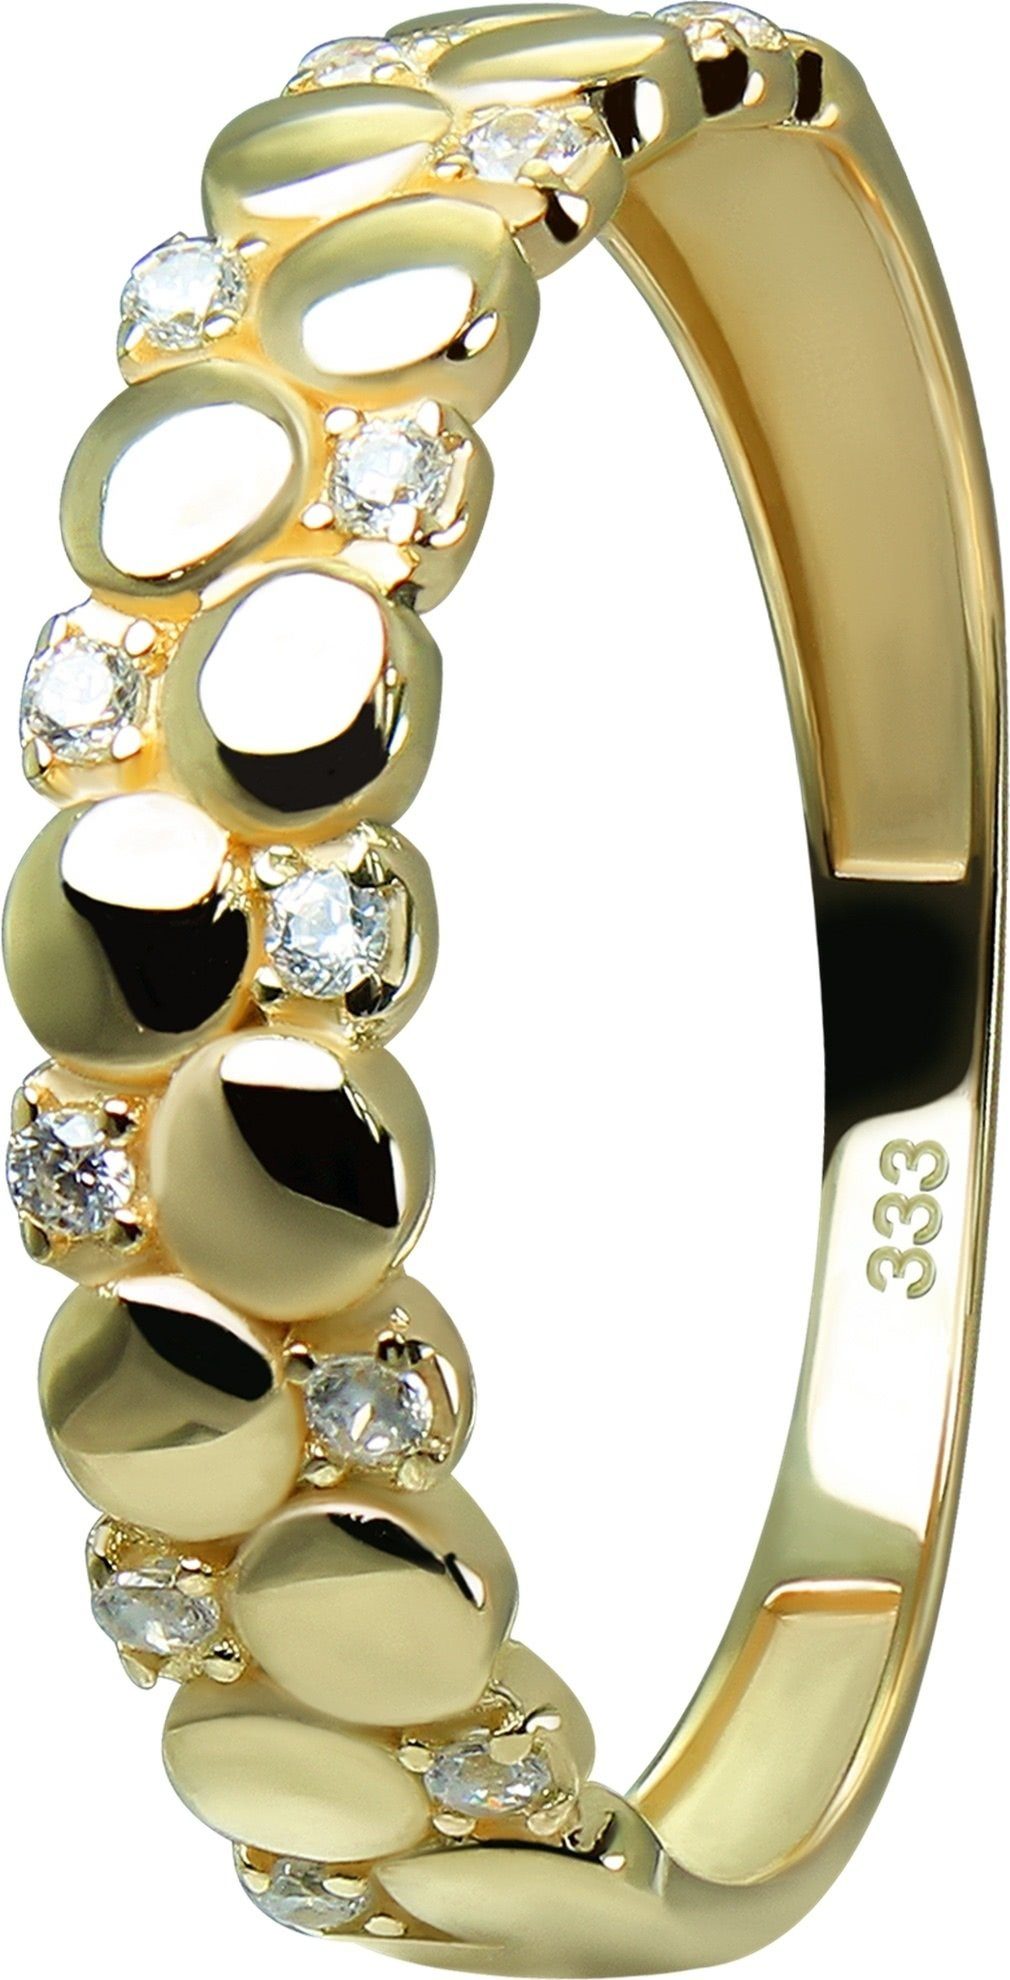 GoldDream Goldring GoldDream Gold Ring Dots Gr.56 Zirkonia (Fingerring), Damen Ring Dots 333 Gelbgold - 8 Karat, Farbe: gold, weiß